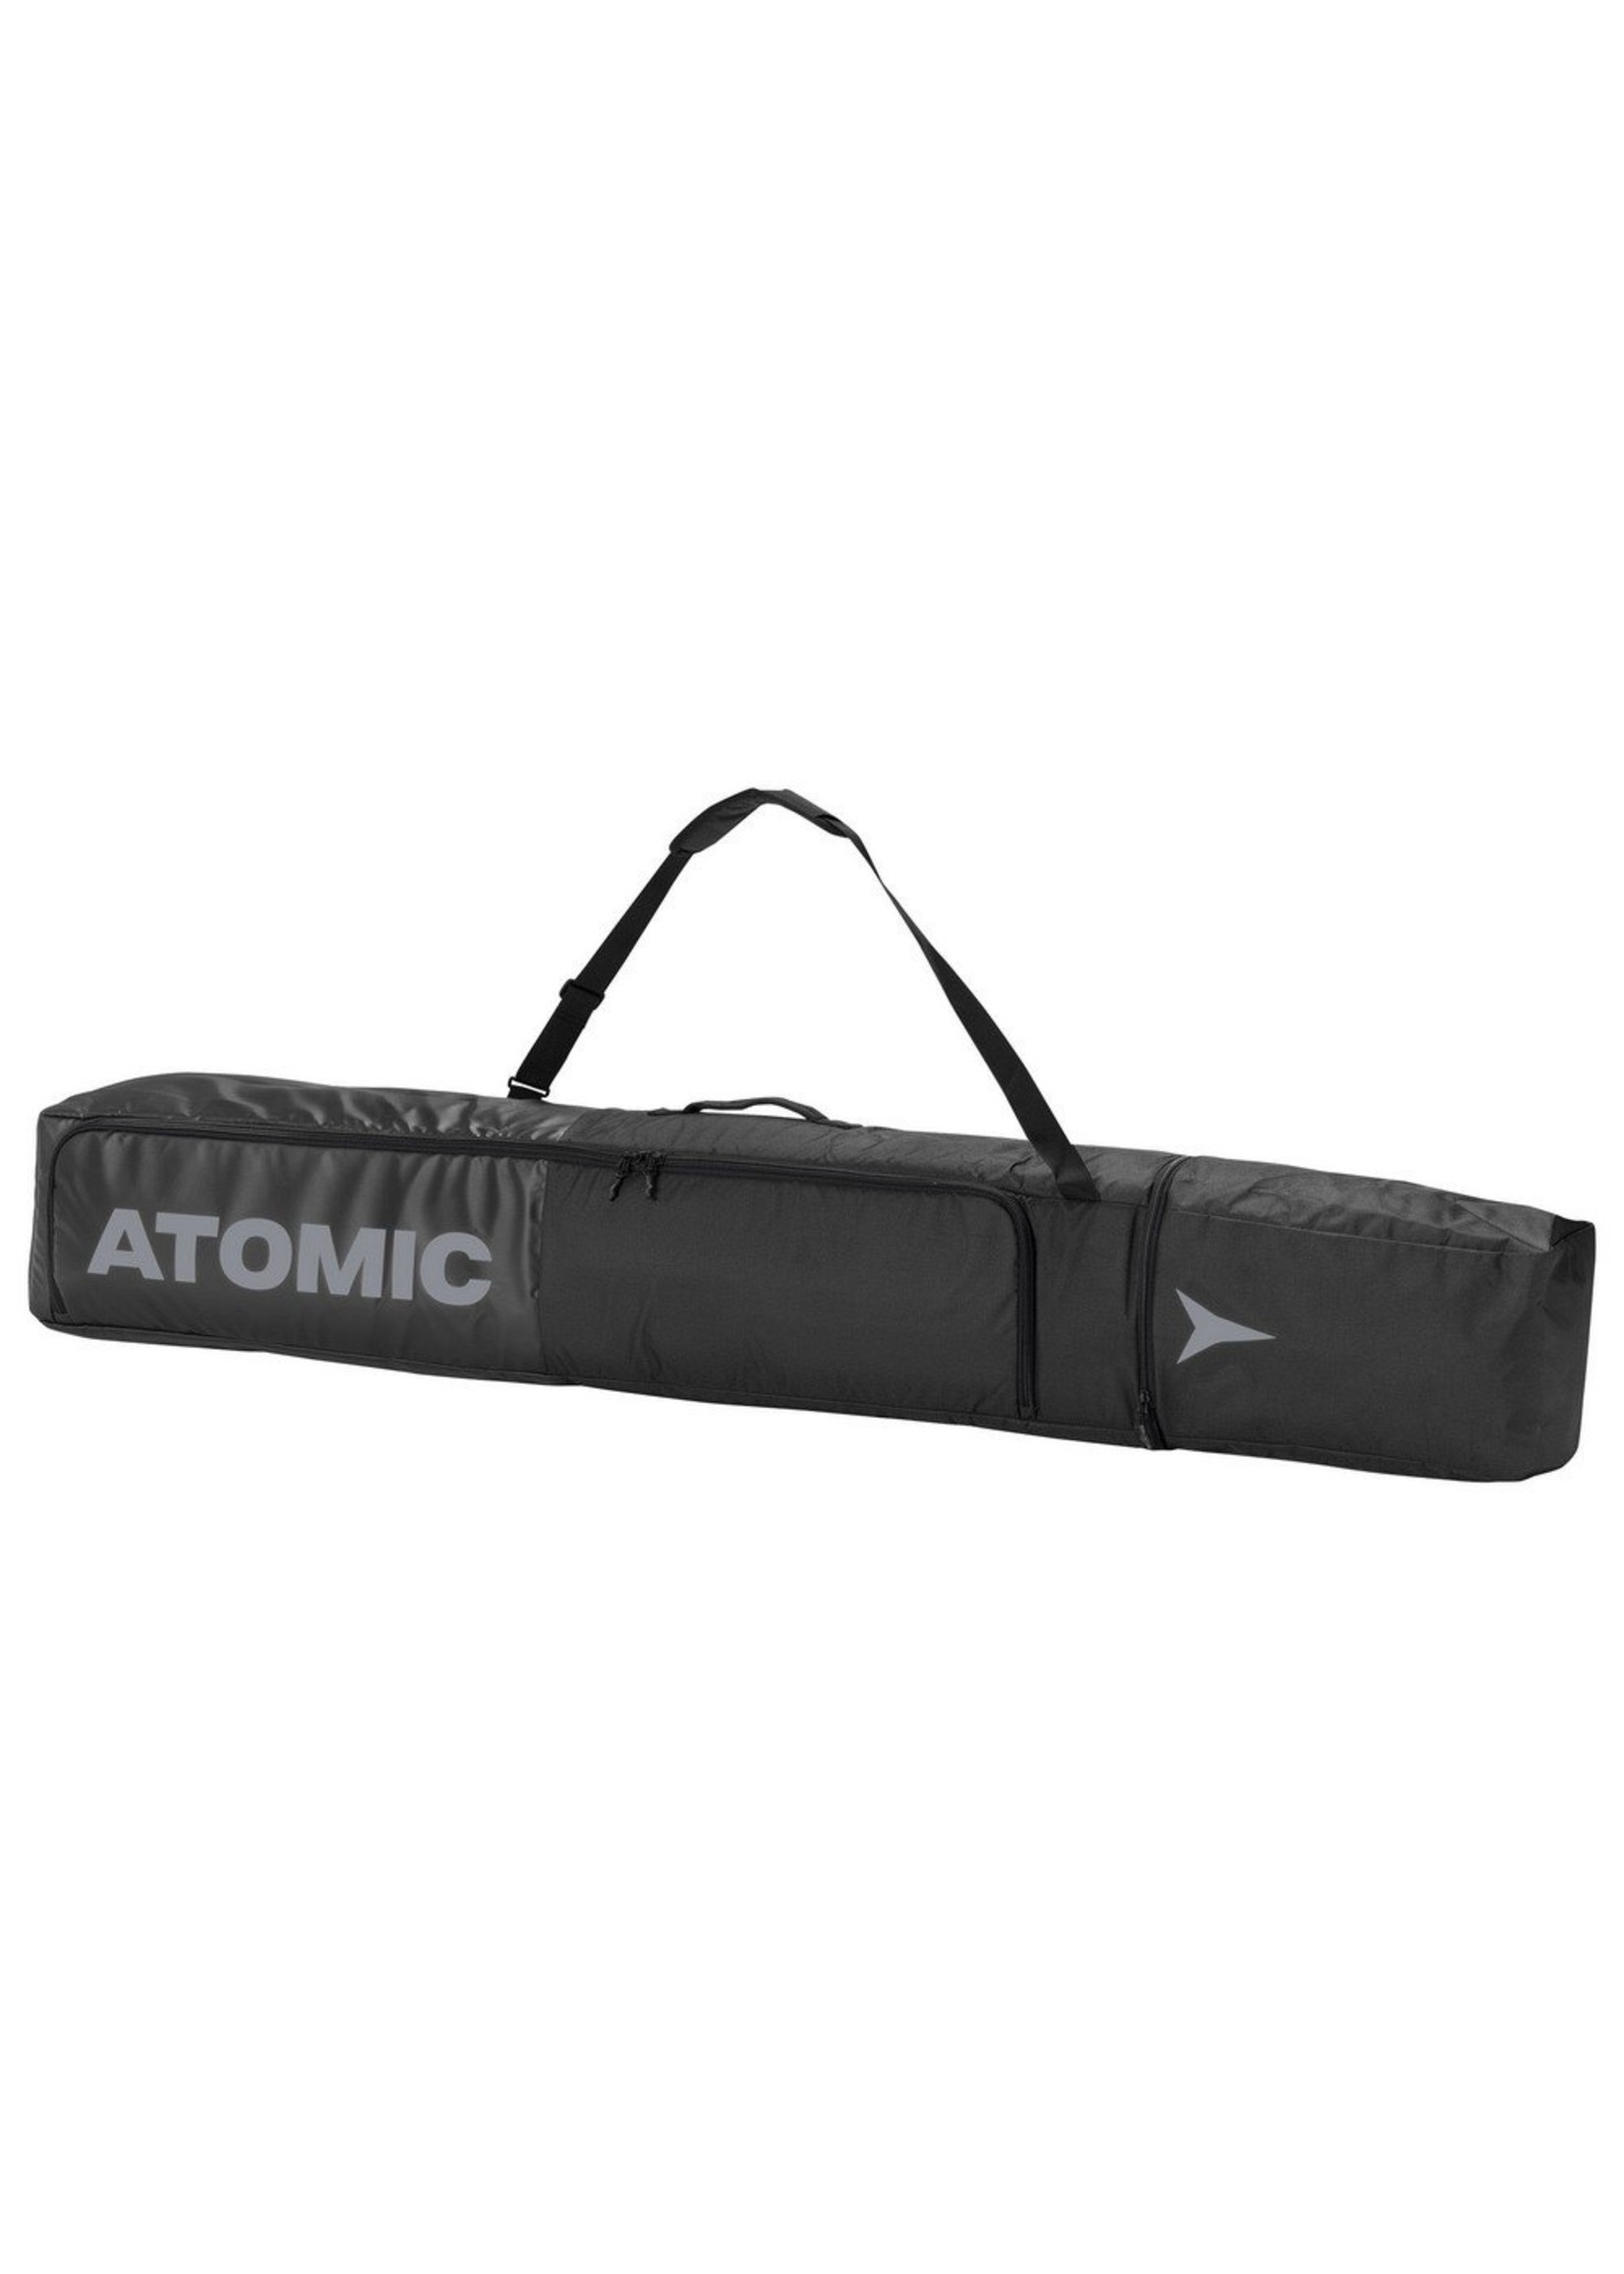 ATOMIC DOUBLE SKI BAG Black/Grey